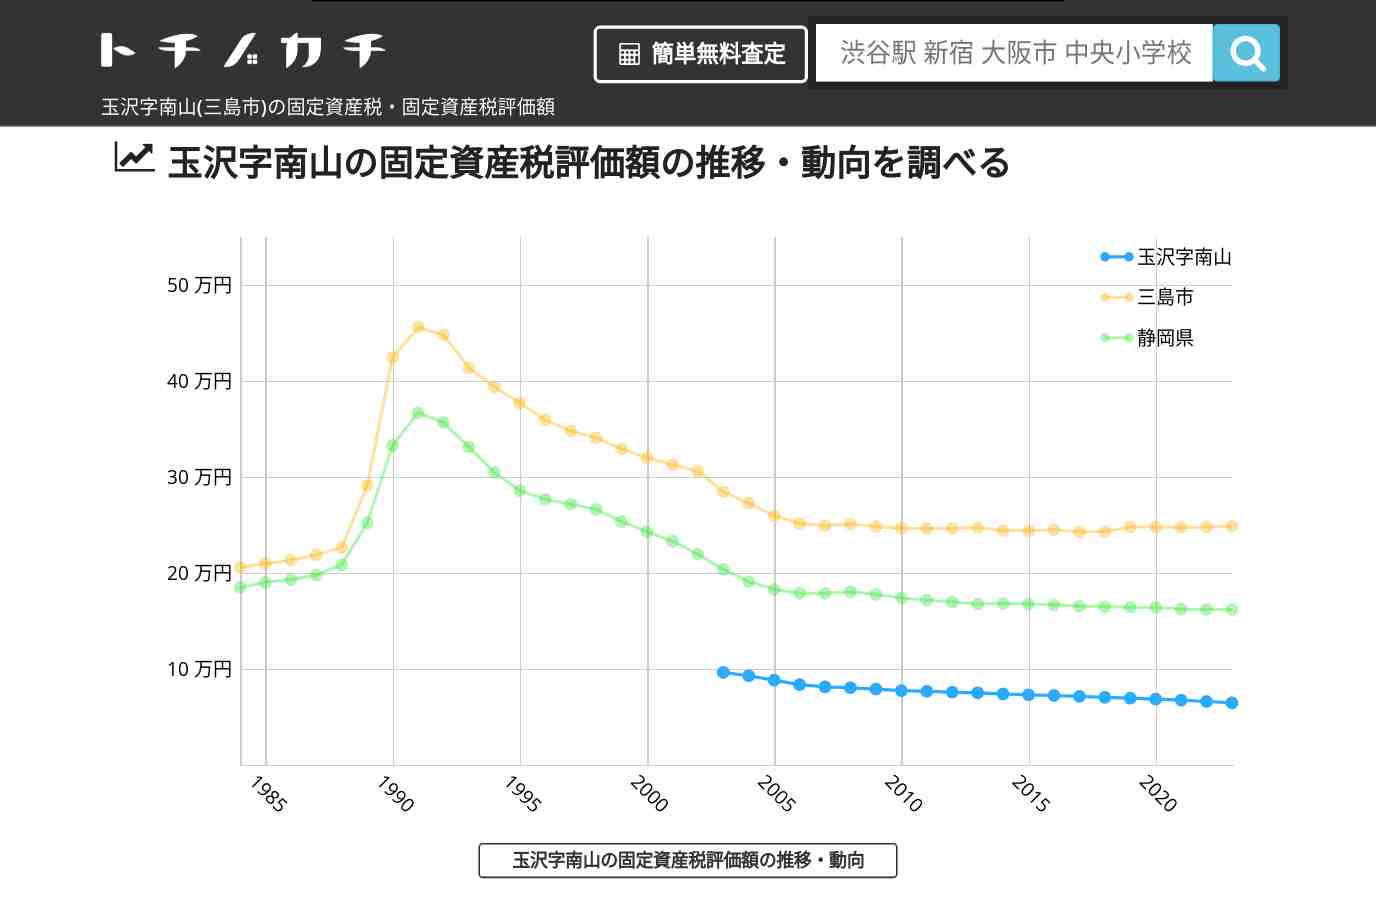 玉沢字南山(三島市)の固定資産税・固定資産税評価額 | トチノカチ